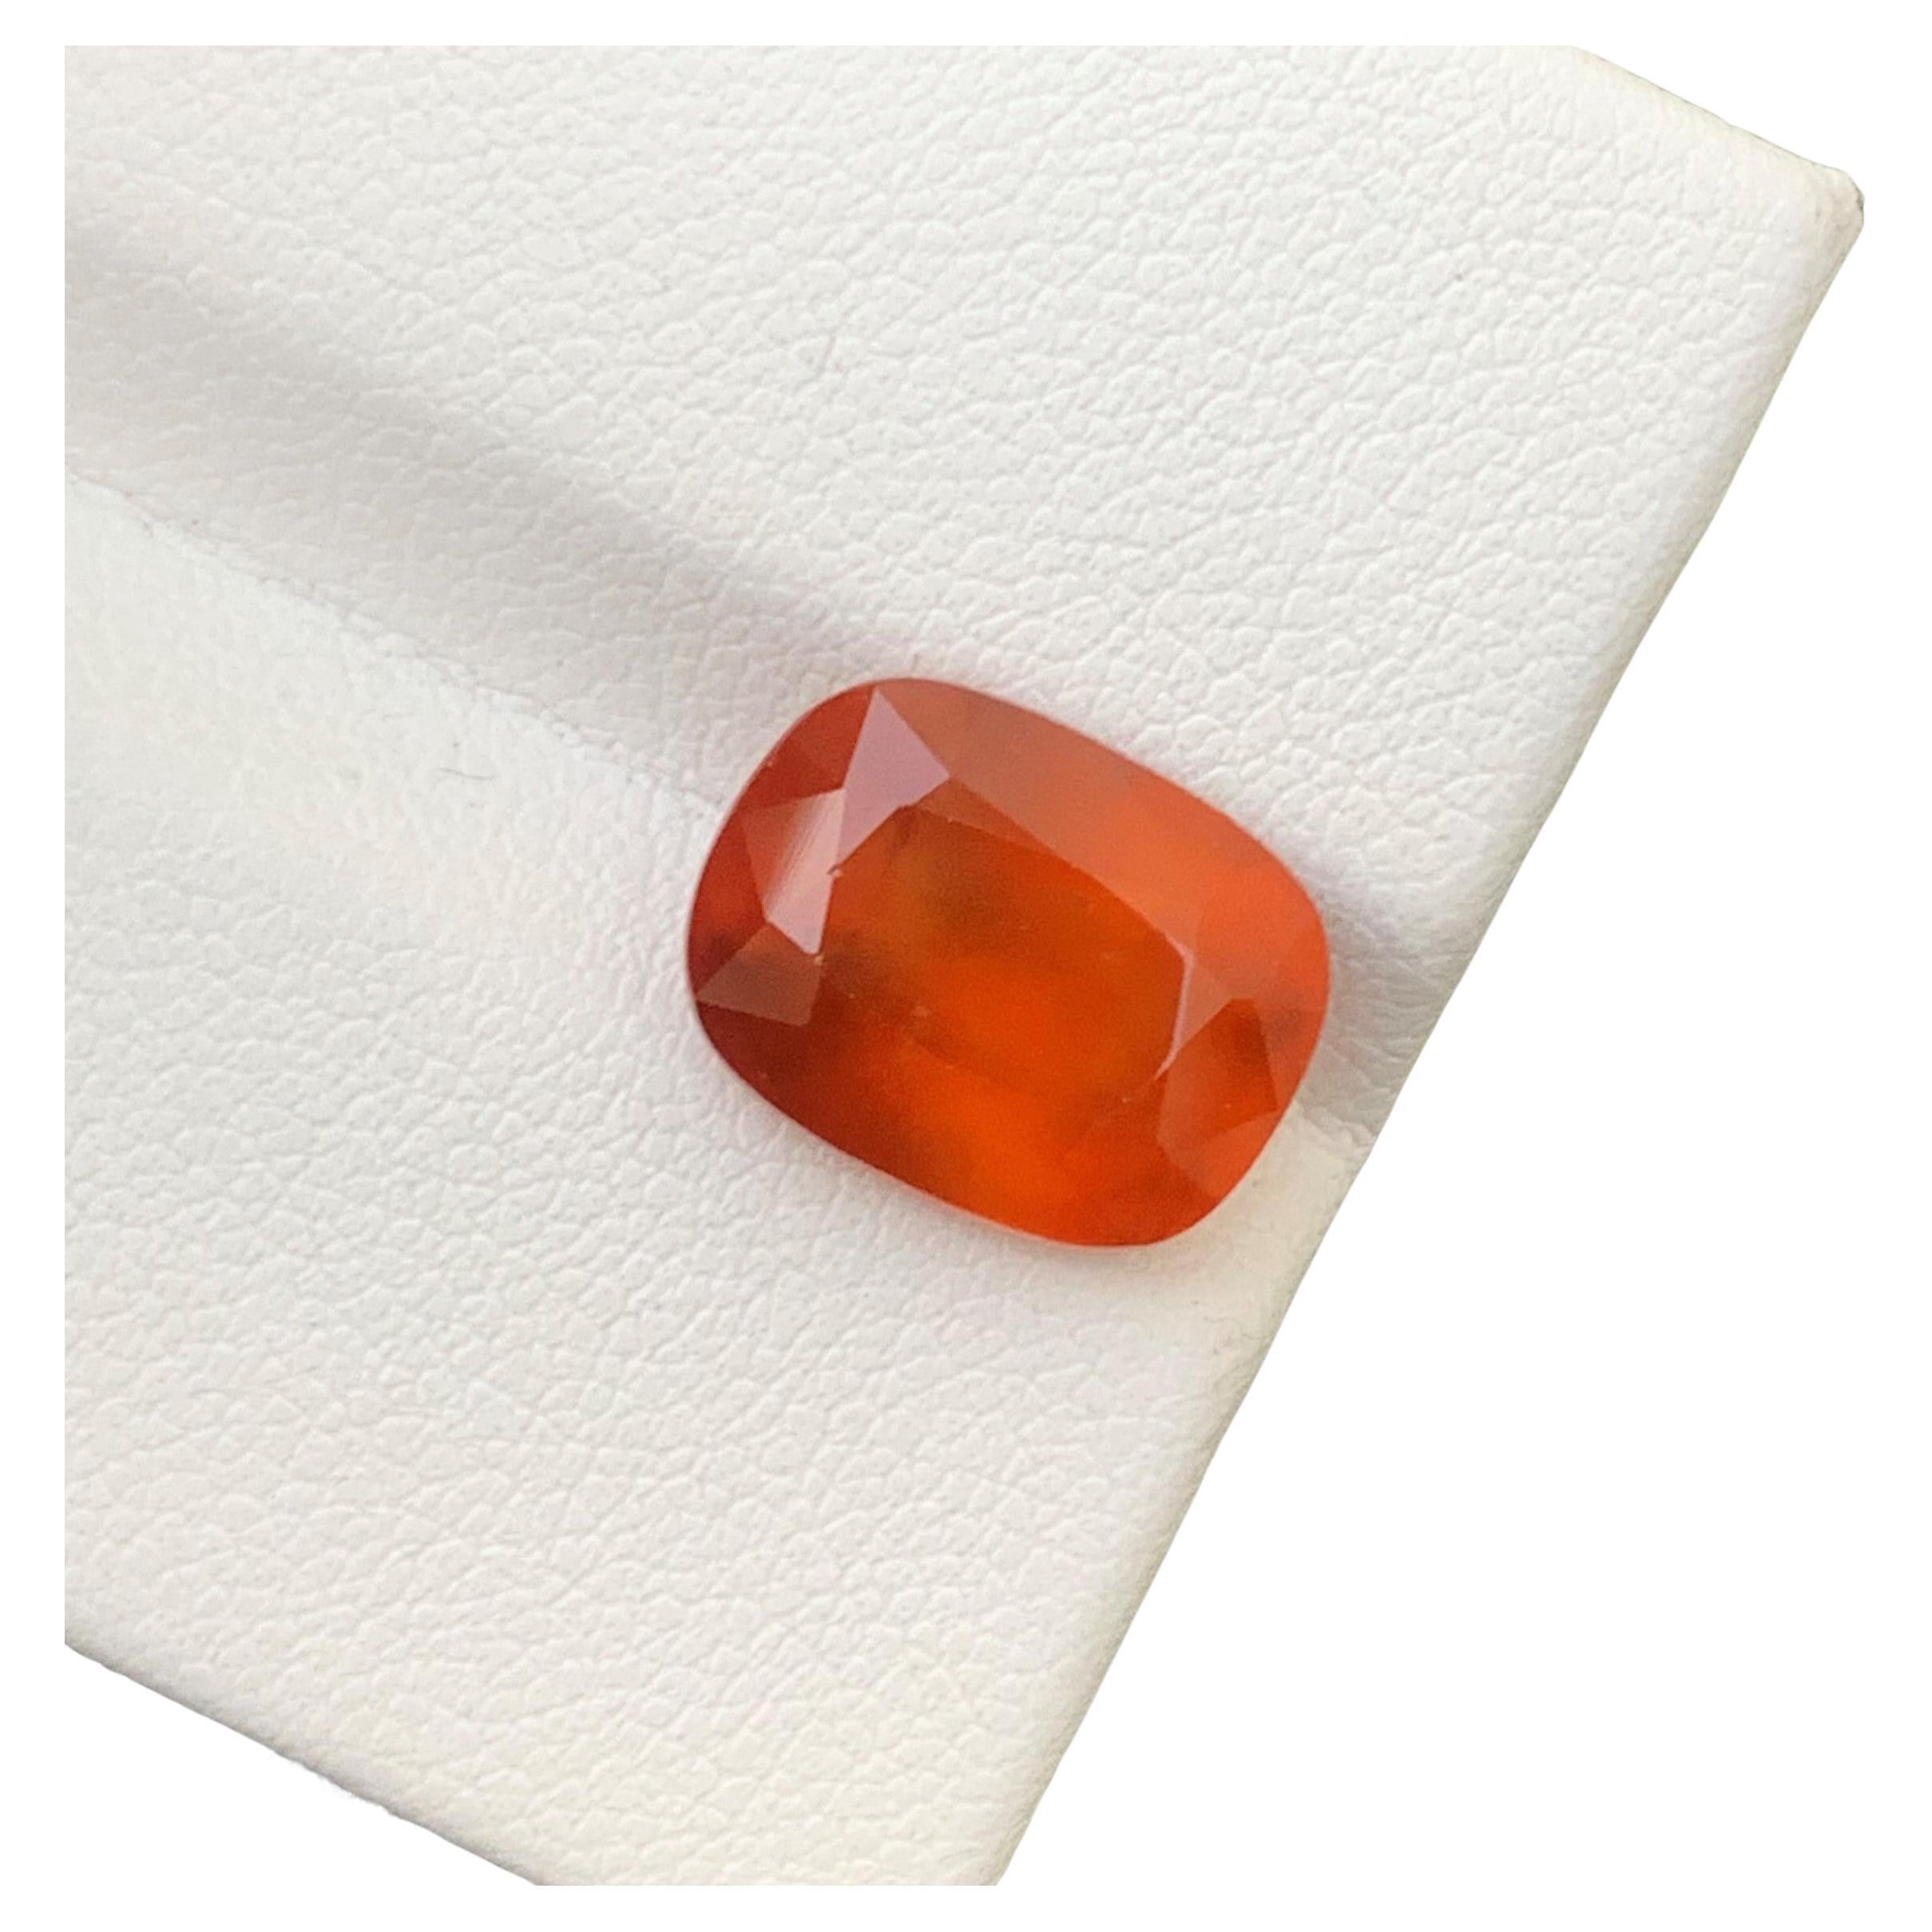 Gorgeous 6.95 Carat Natural Loose Hessonite Garnet Long Cushion Shape Gemstone For Sale